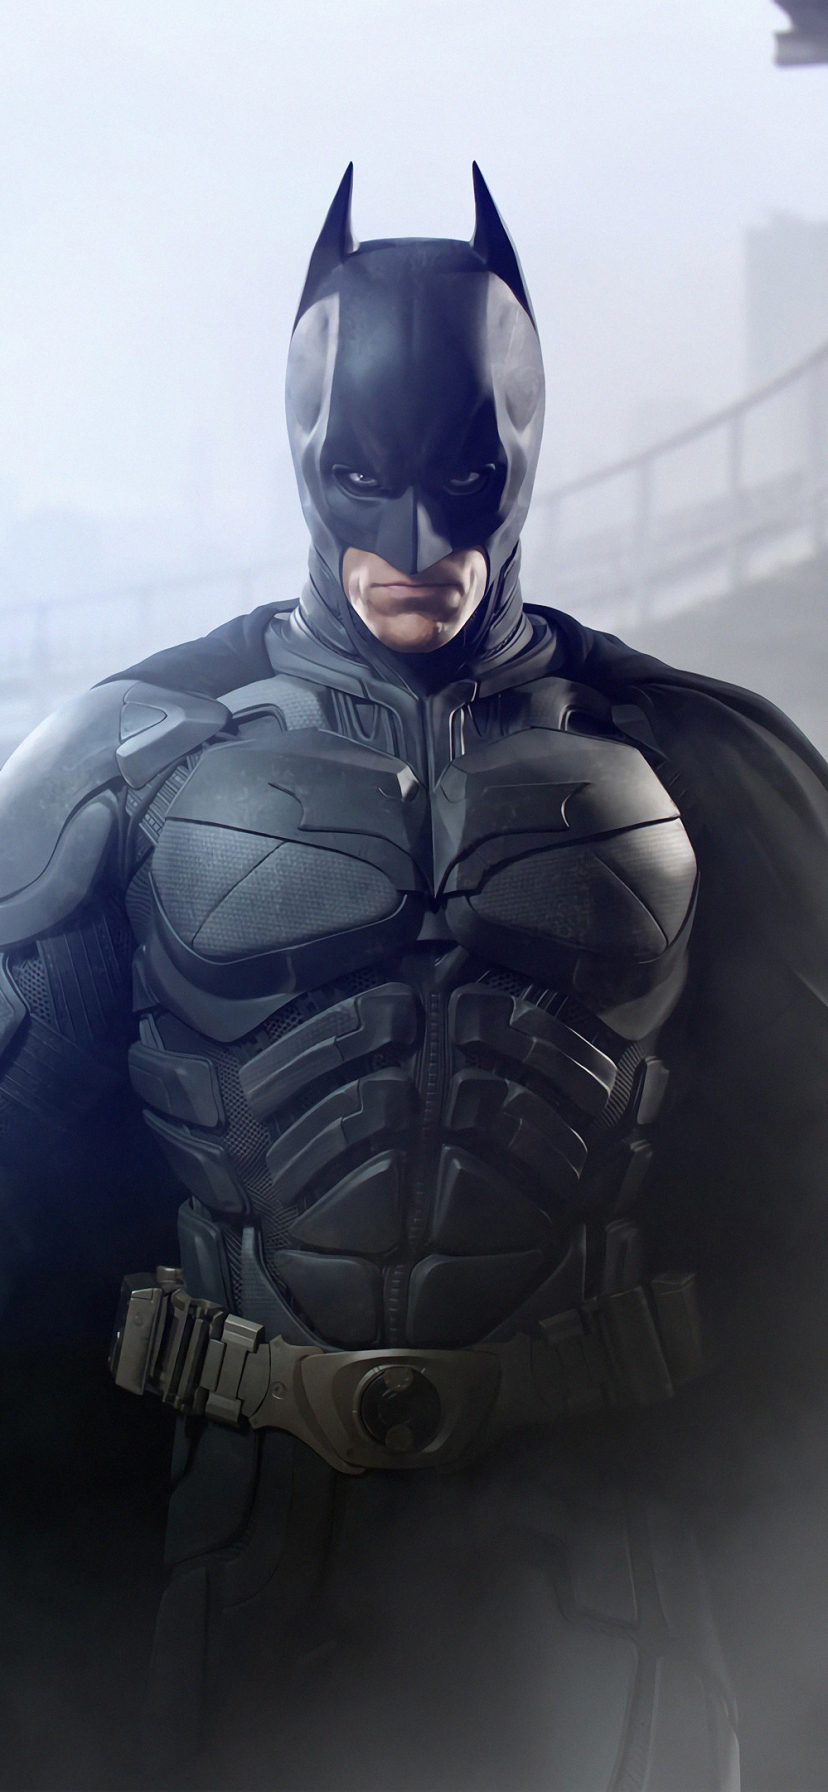 Handy-Wallpaper Batman, Filme, Dc Comics, The Dark Knight Rises kostenlos herunterladen.